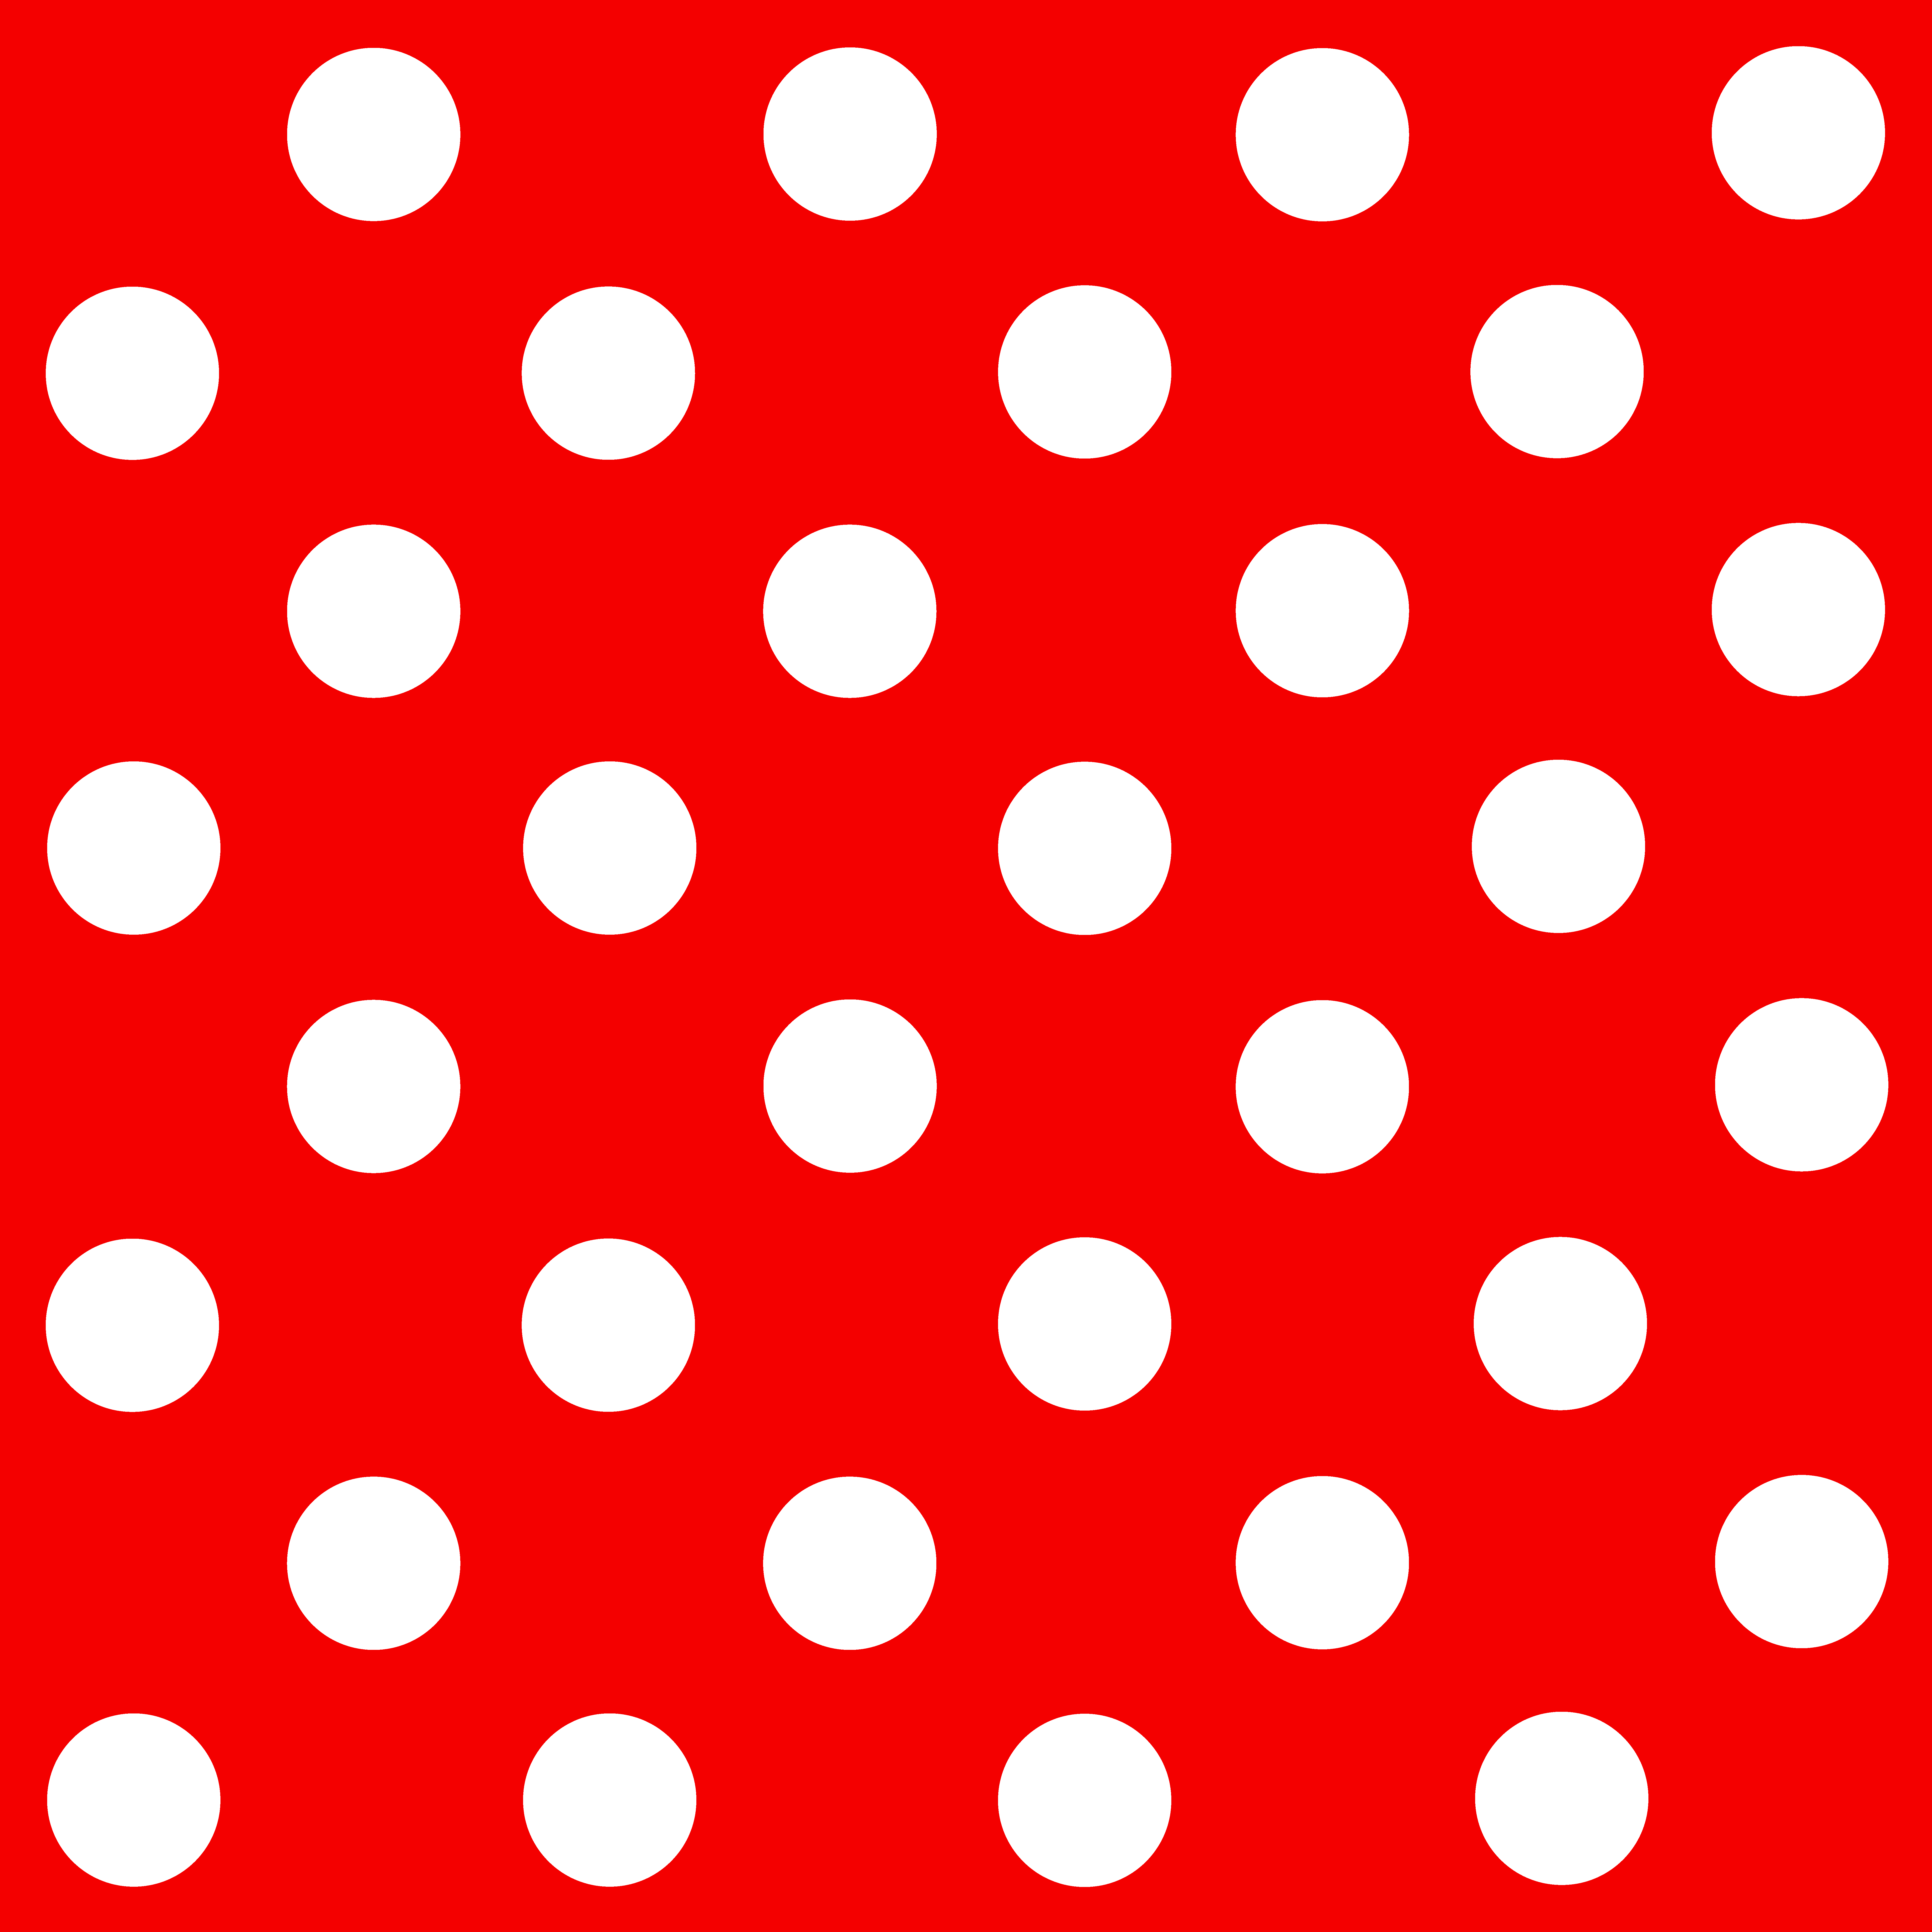 Polka Dot Clip Art